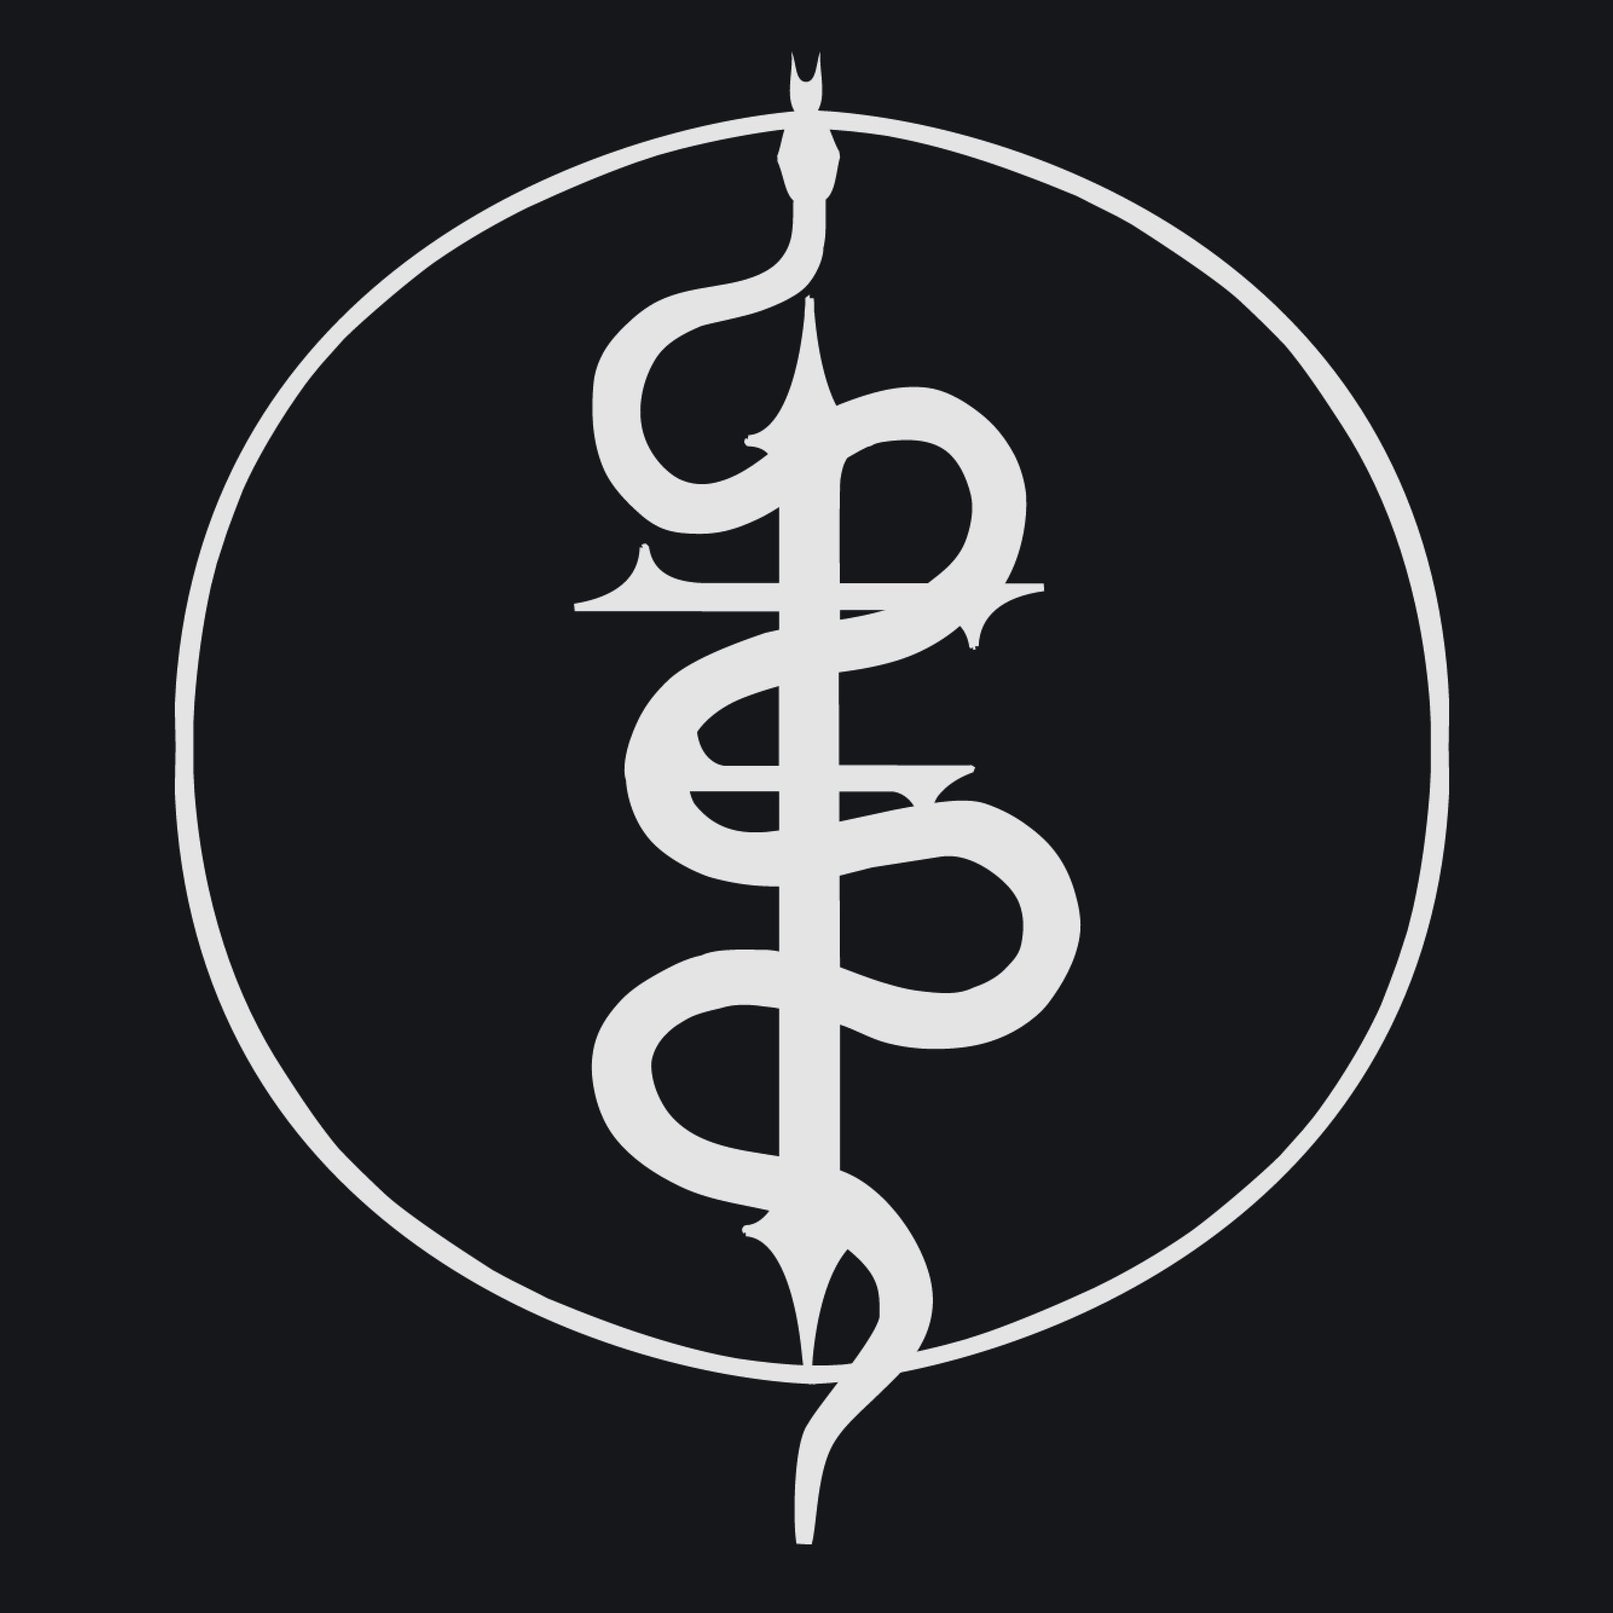 reptyle - band logo